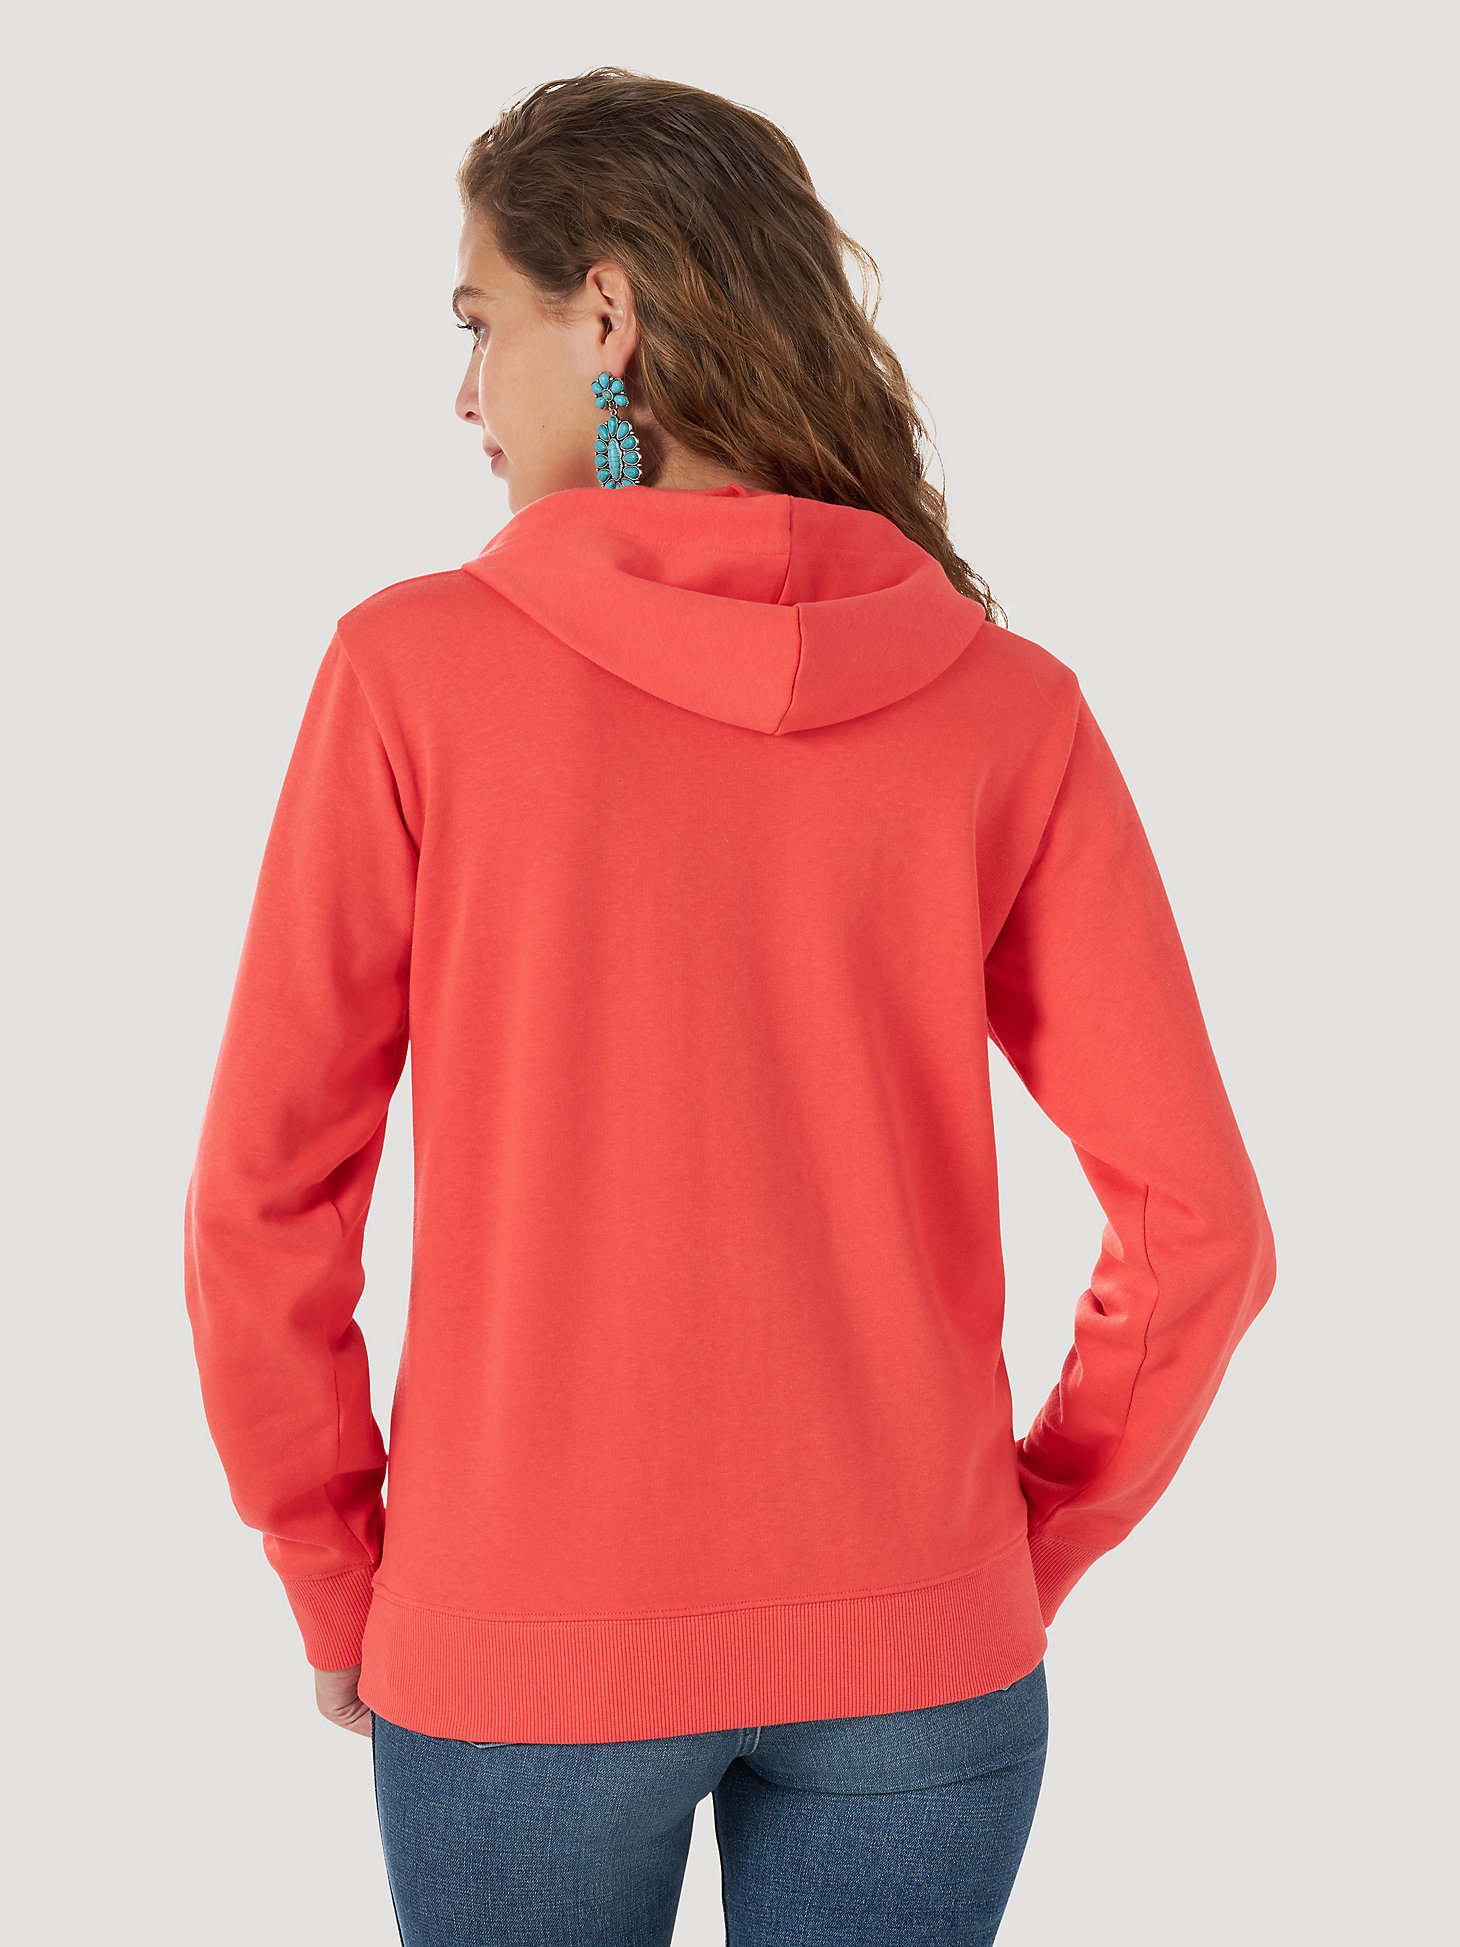 Women's Wrangler Retro® Metallic Logo Pullover Hoodie in pink alternative view 1